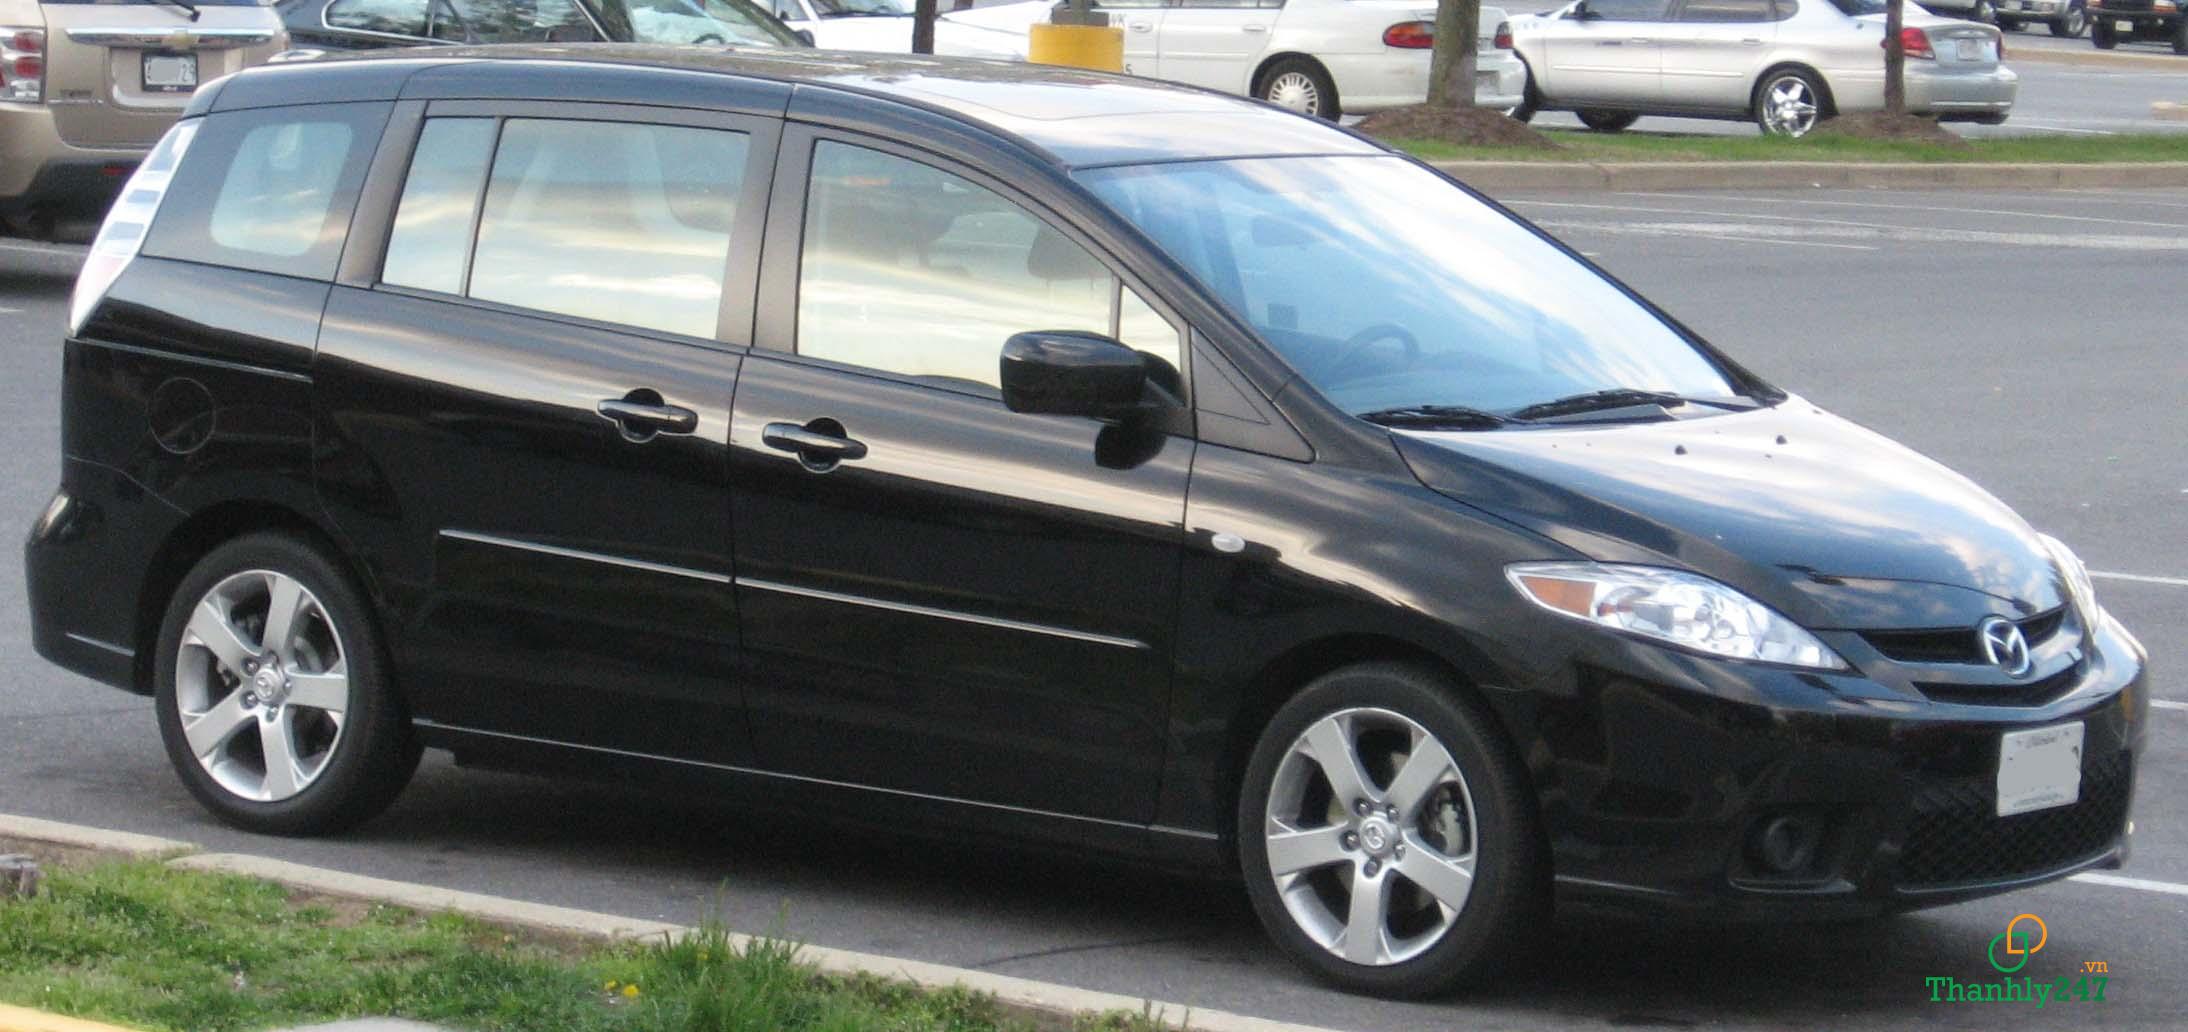 Xe hơi Mazda 5 đời 2009 - 2010